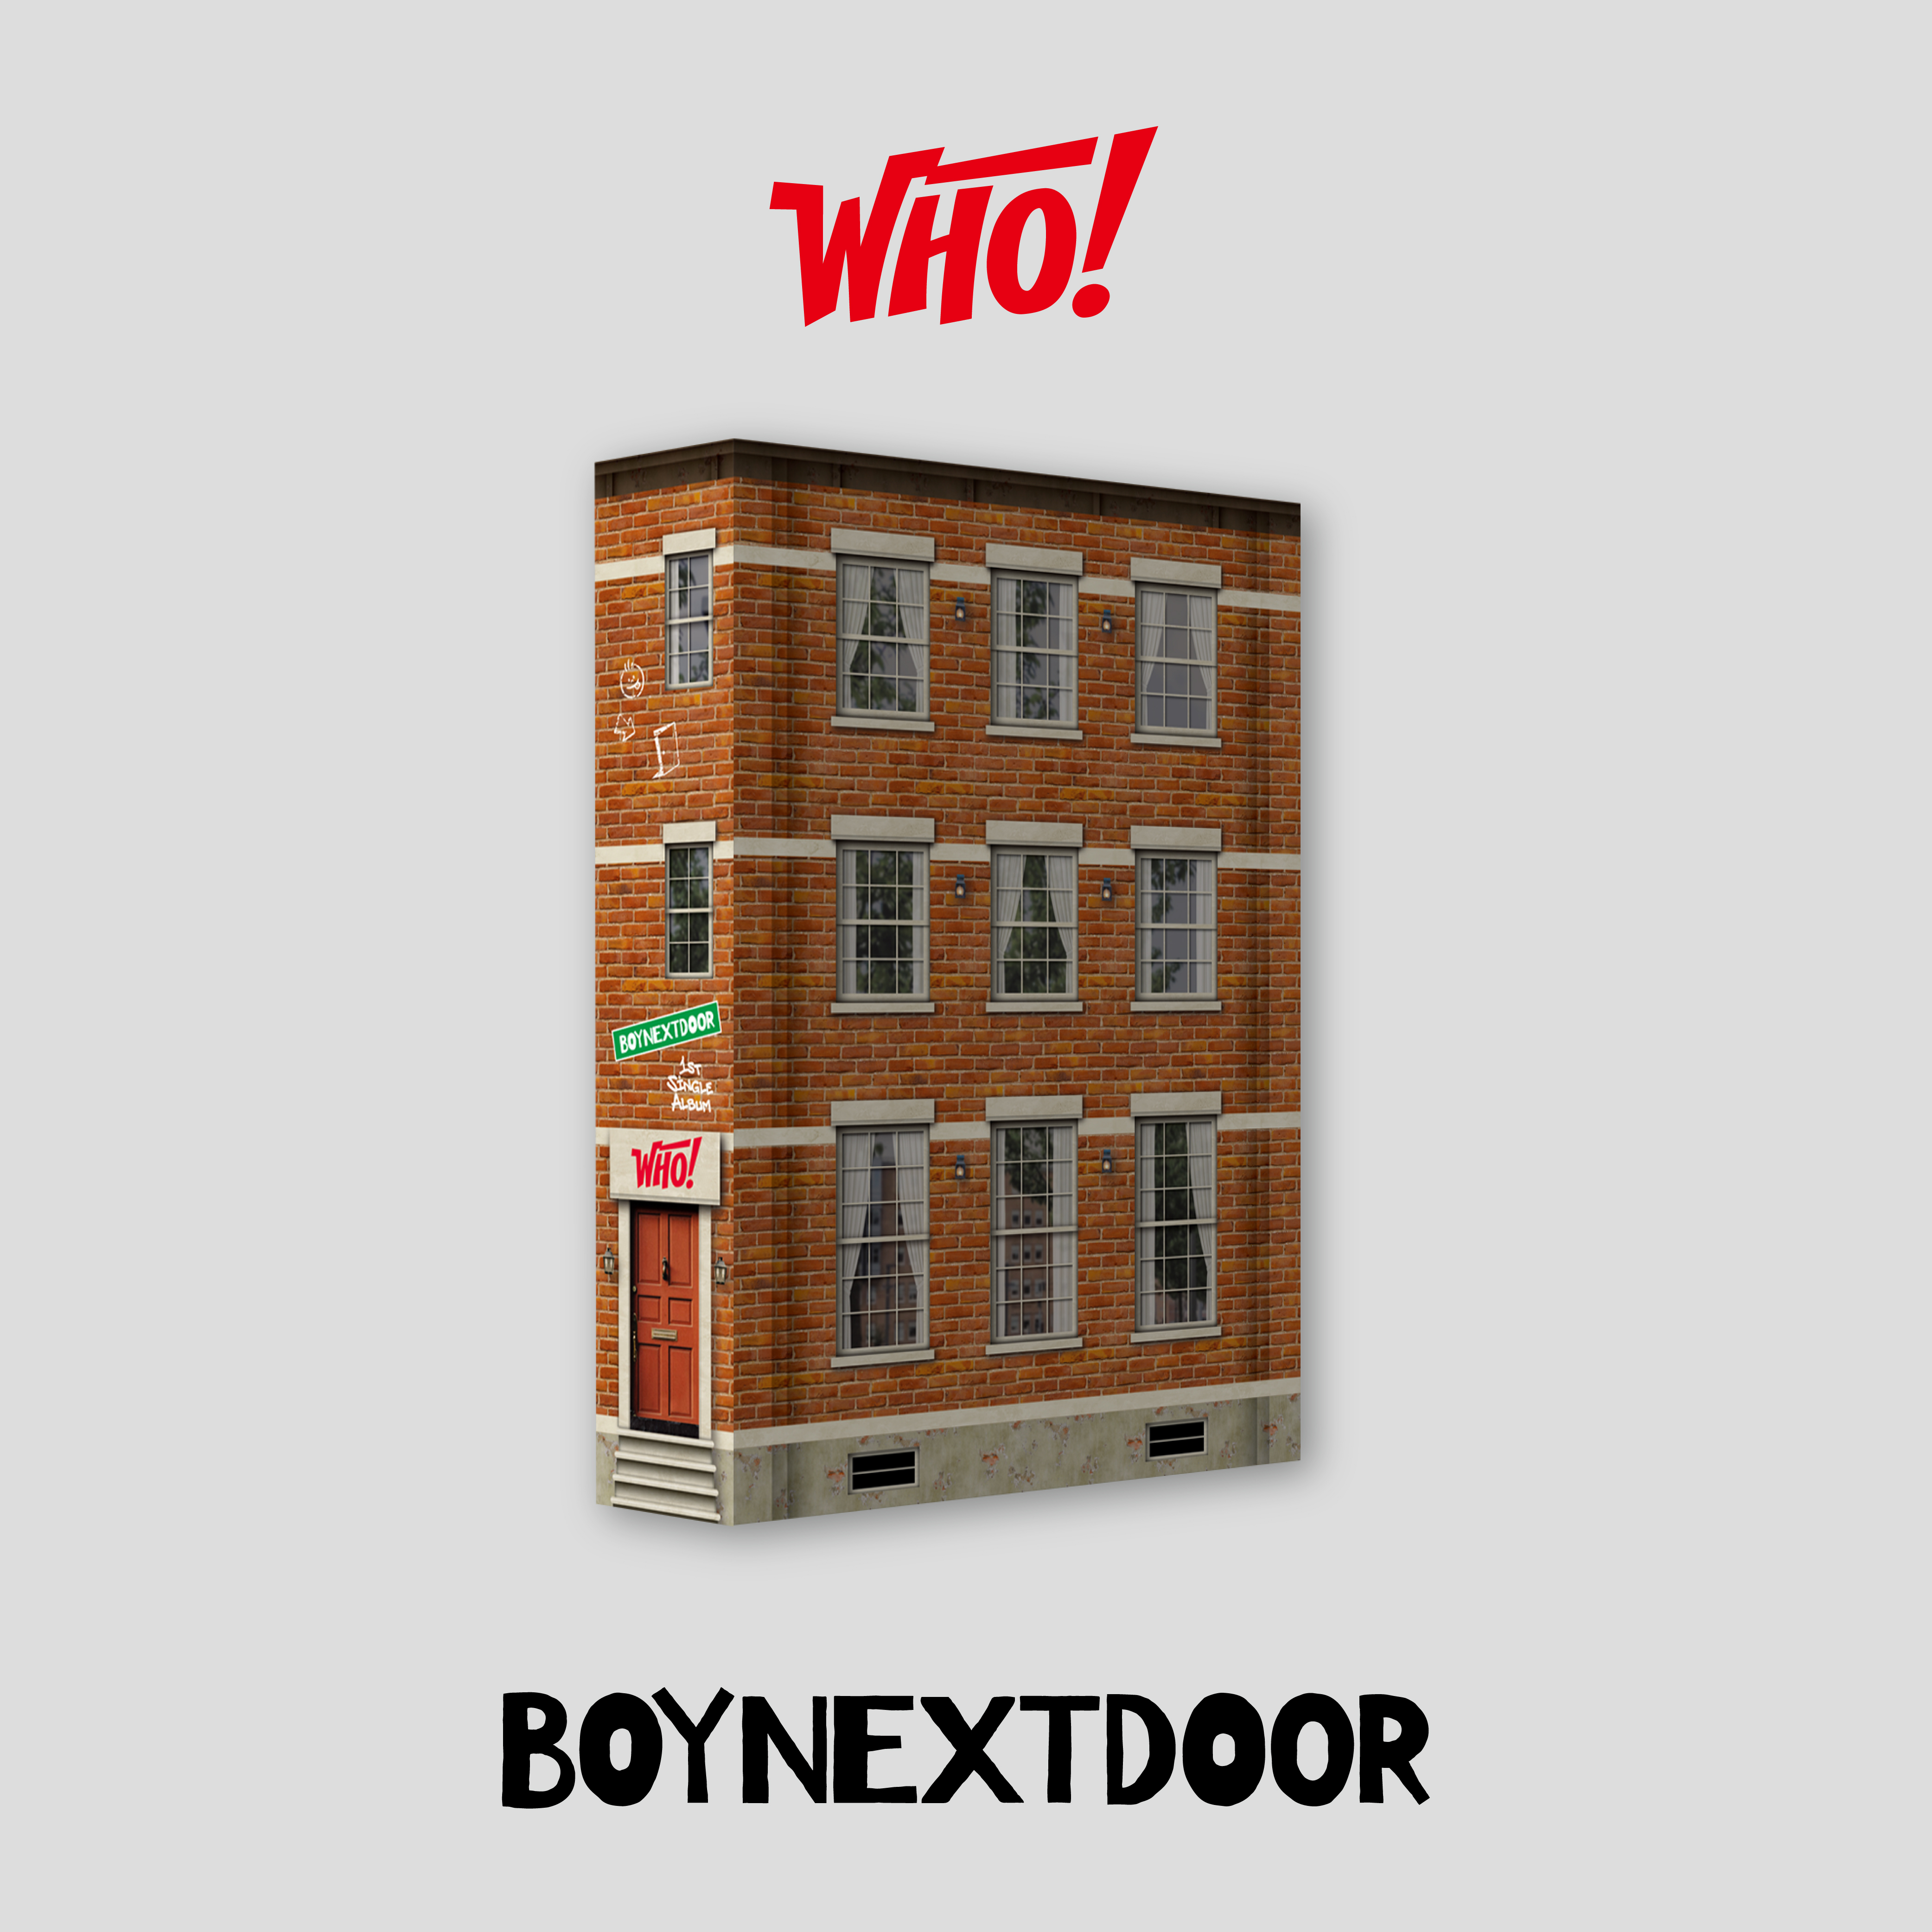 ktown4u.com : BOYNEXTDOOR - 1st Single [WHO!] (WHO ver.)